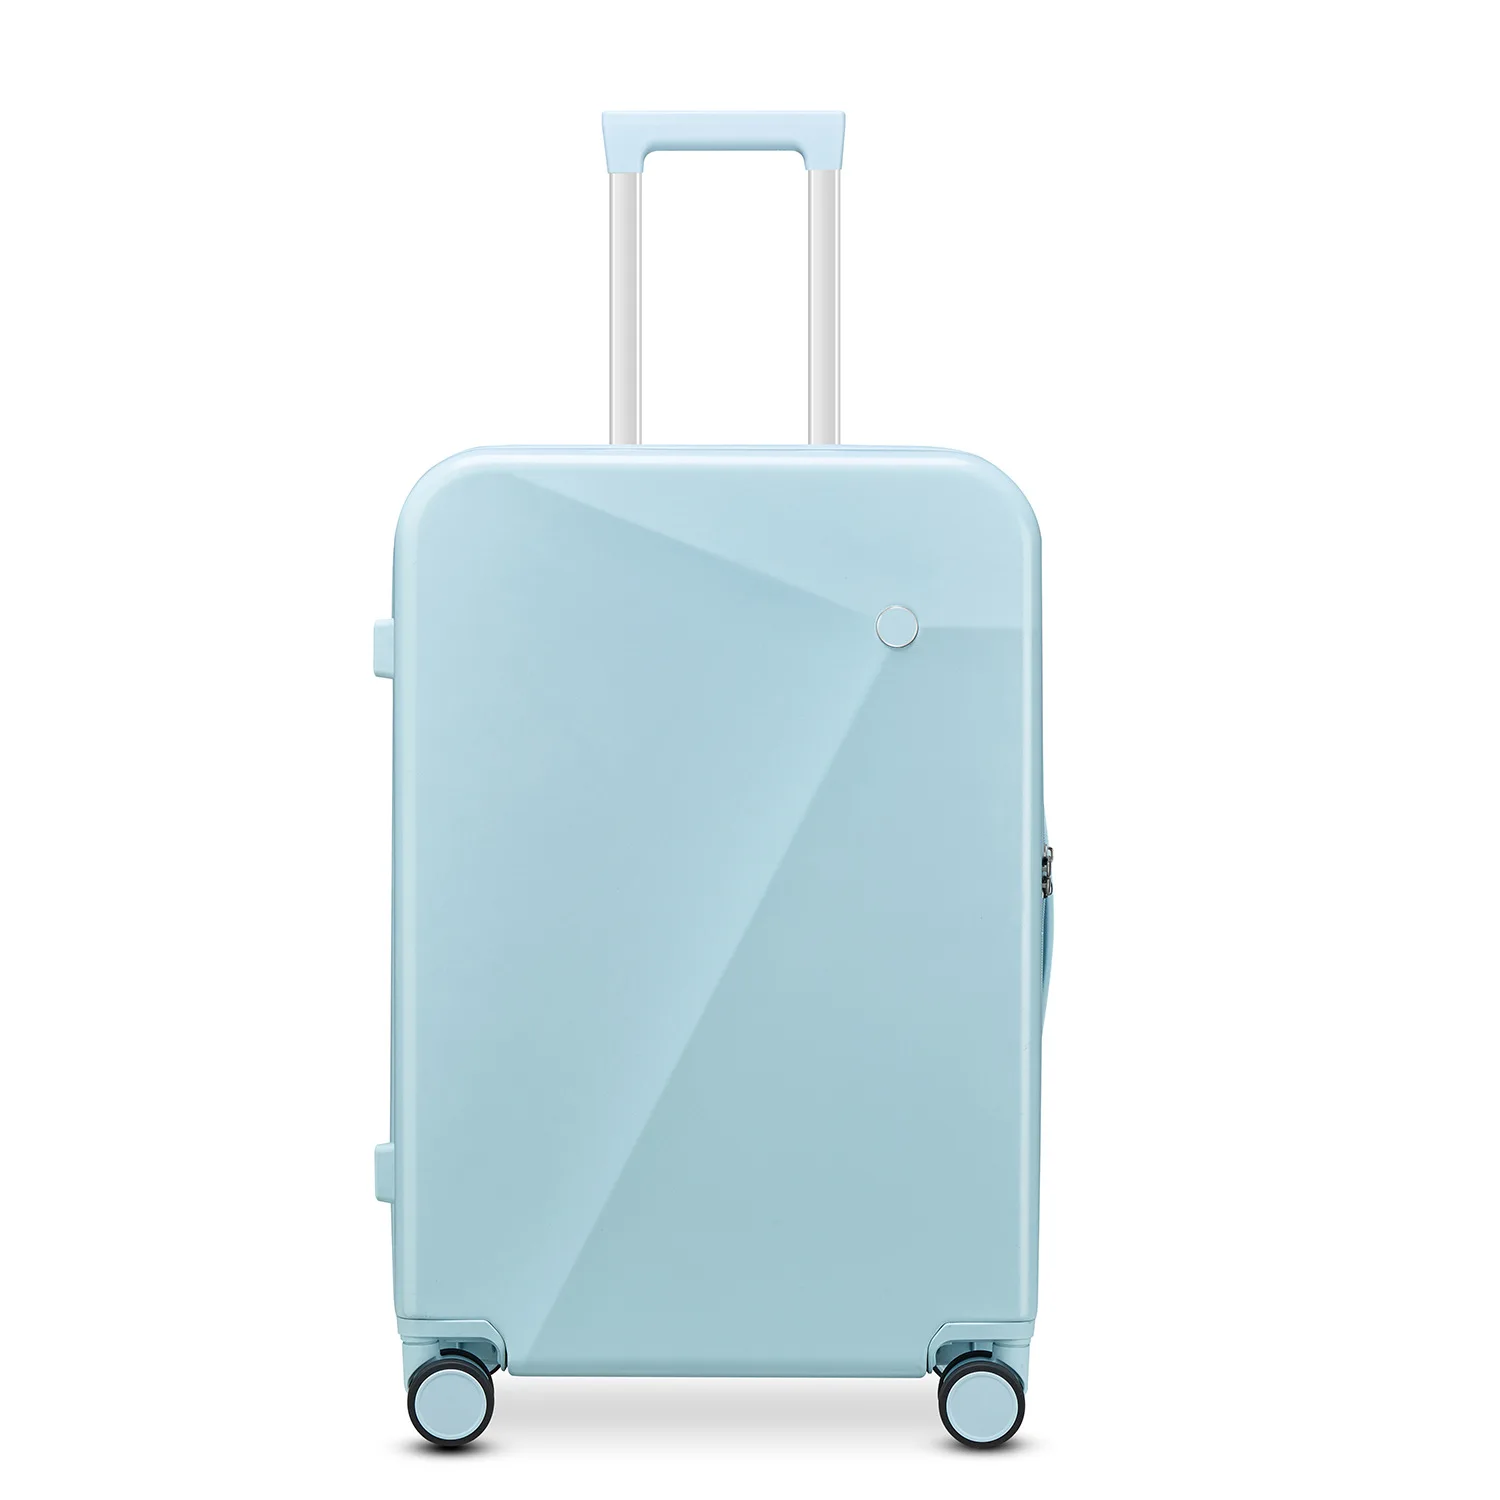 Quiet rotating travel luggage  TB012-79652